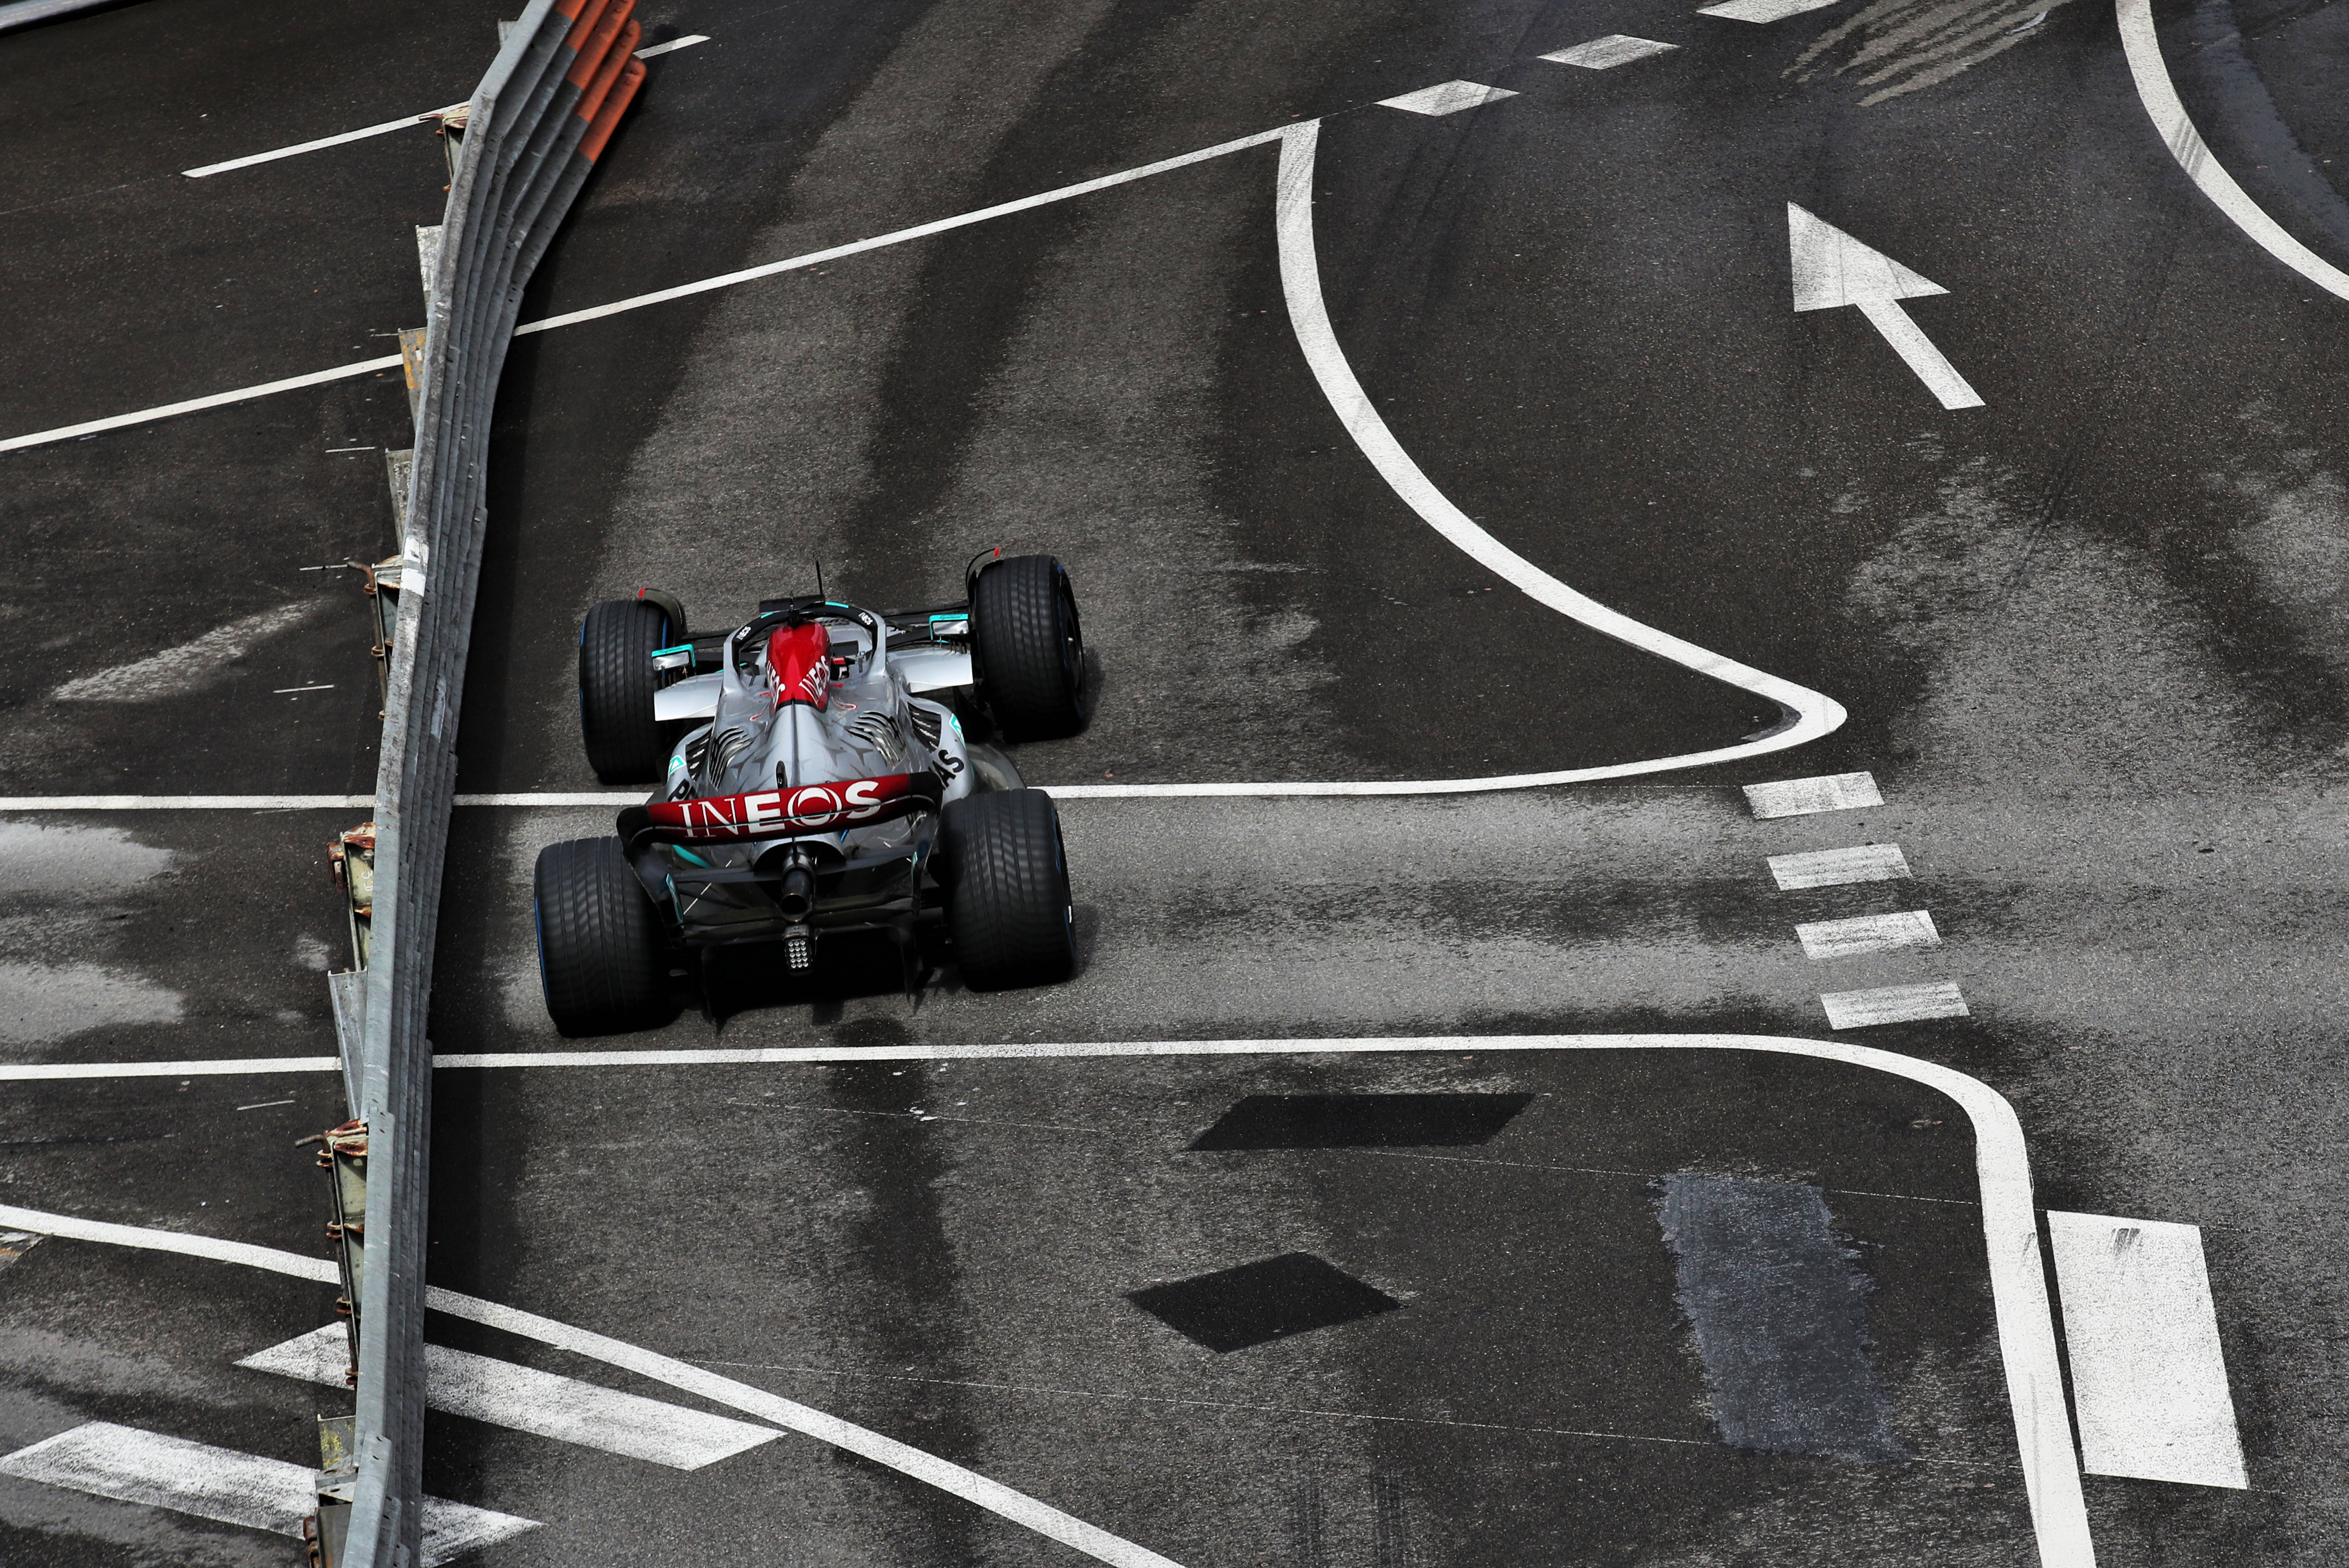 Motor Racing Formula One World Championship Monaco Grand Prix Sunday Monte Carlo, Monaco